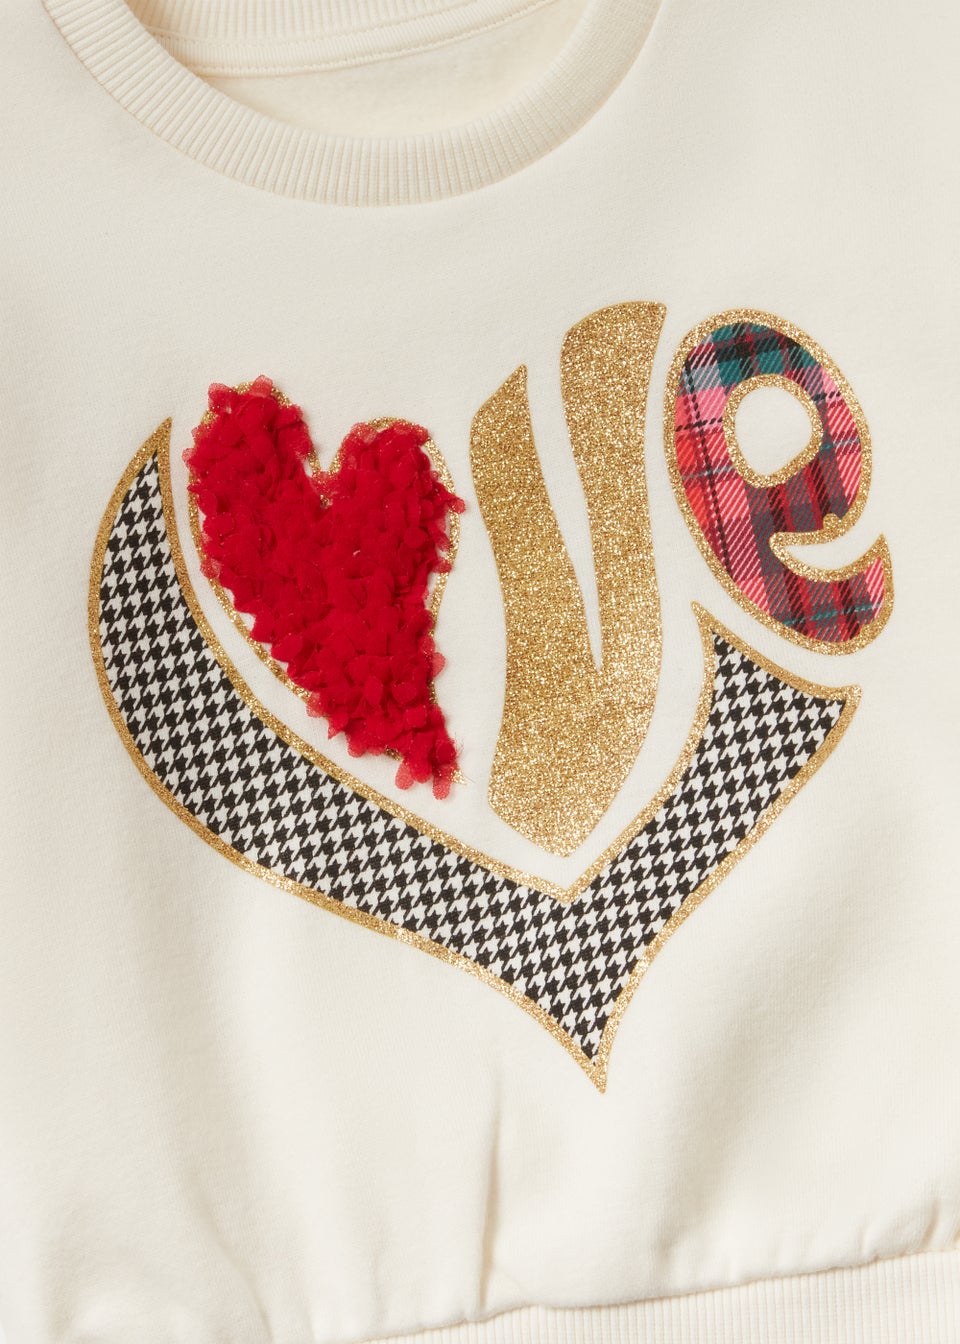 Girls Cream Love Sweatshirt (9mths-6yrs)